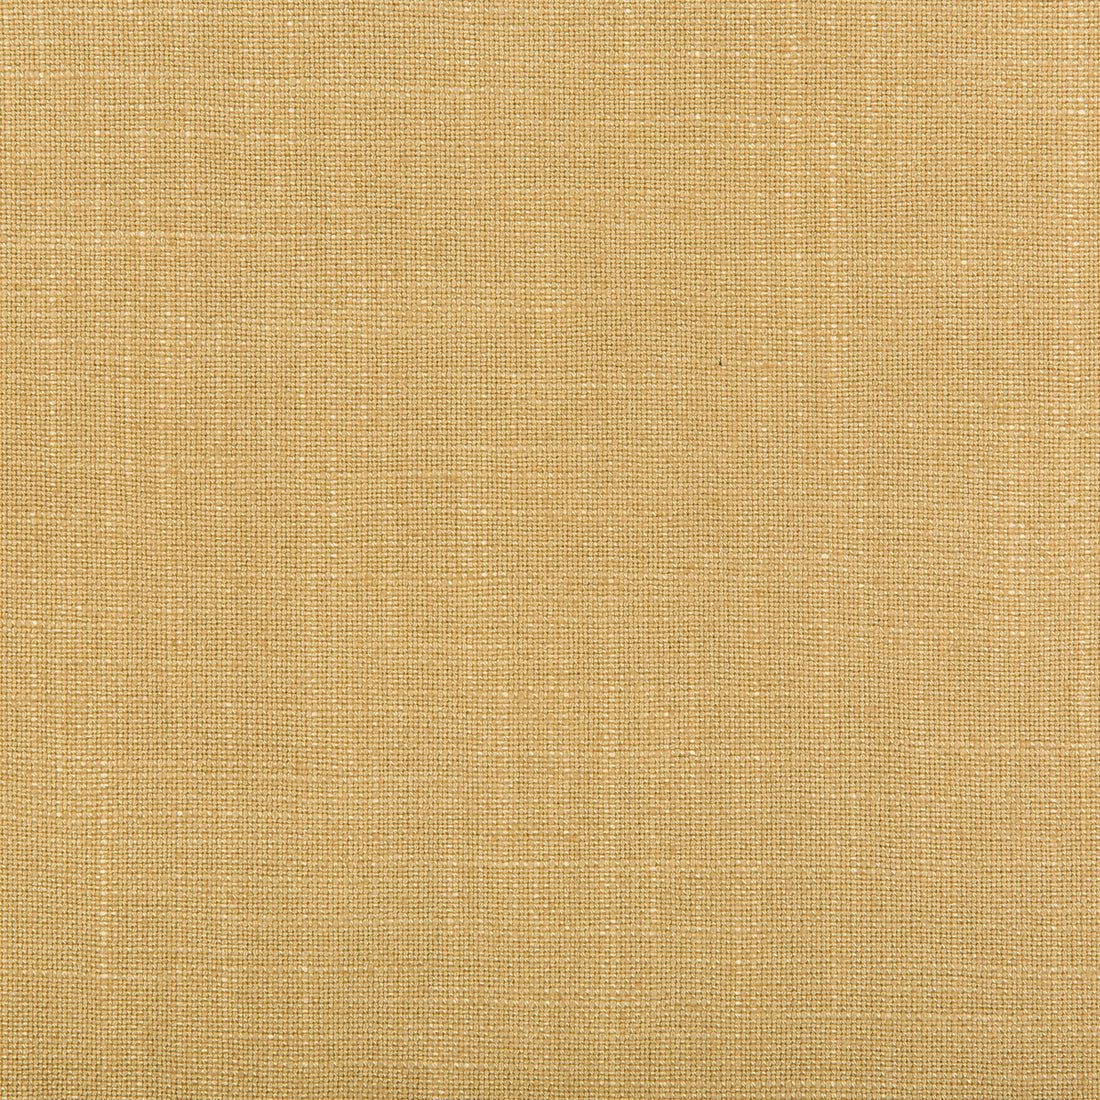 Aura fabric in rattan color - pattern 35520.4.0 - by Kravet Design